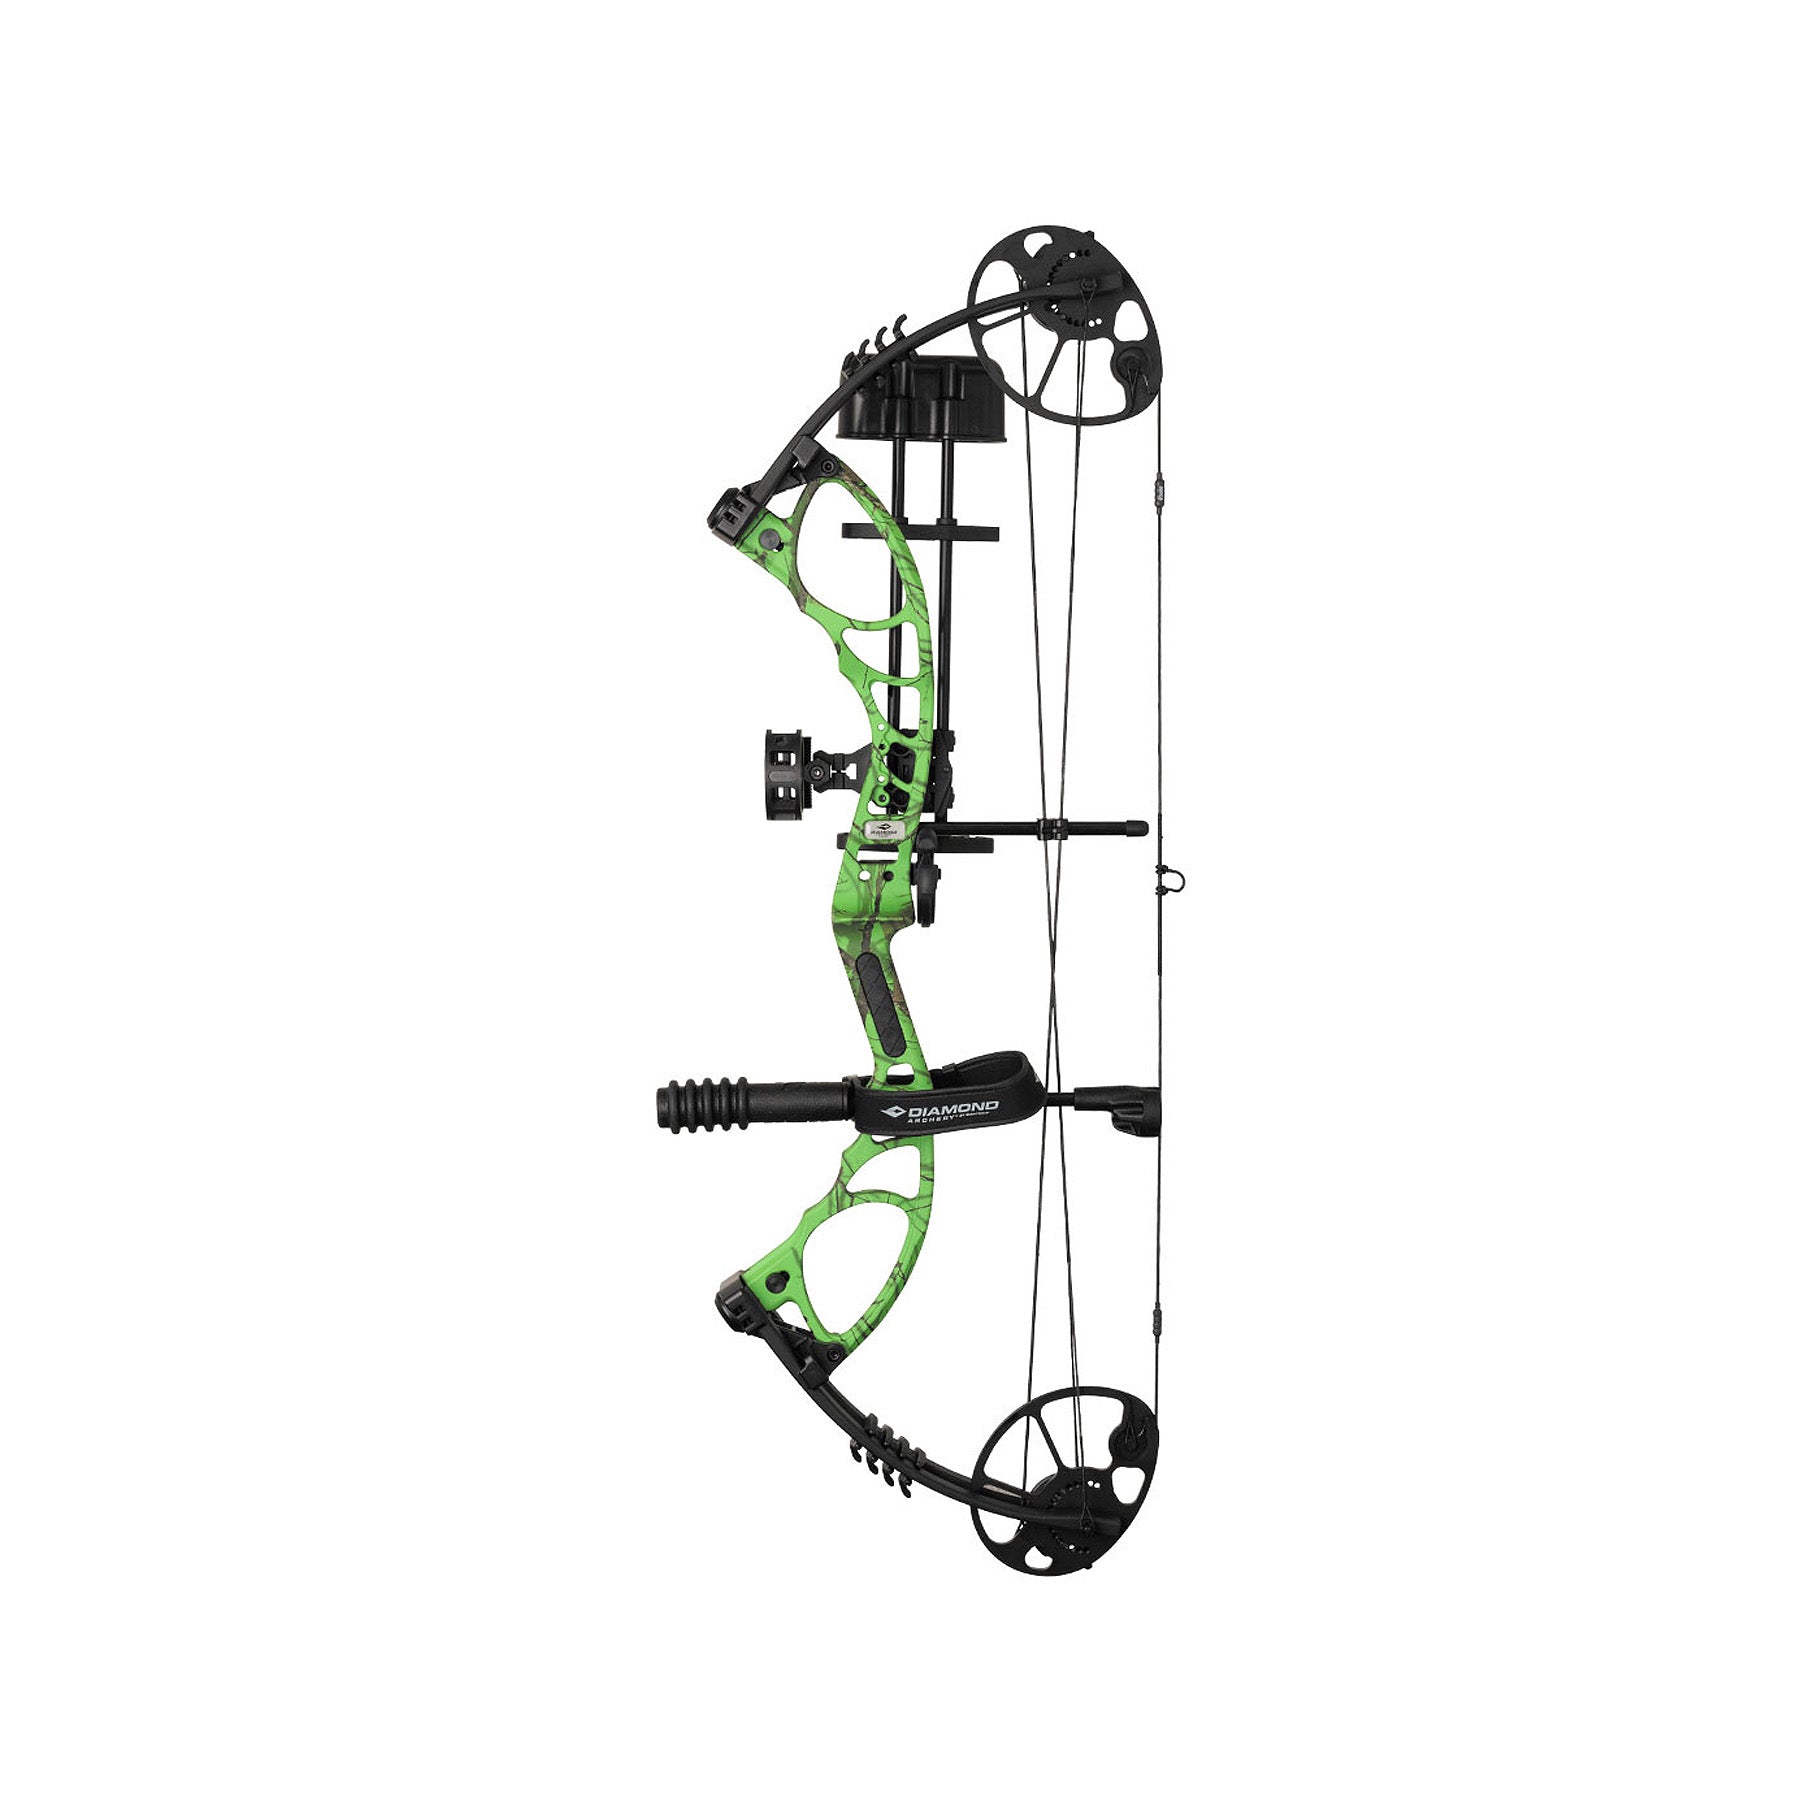 Diamond Archery Edge XT Compound Bow Package-Canada Archery Online